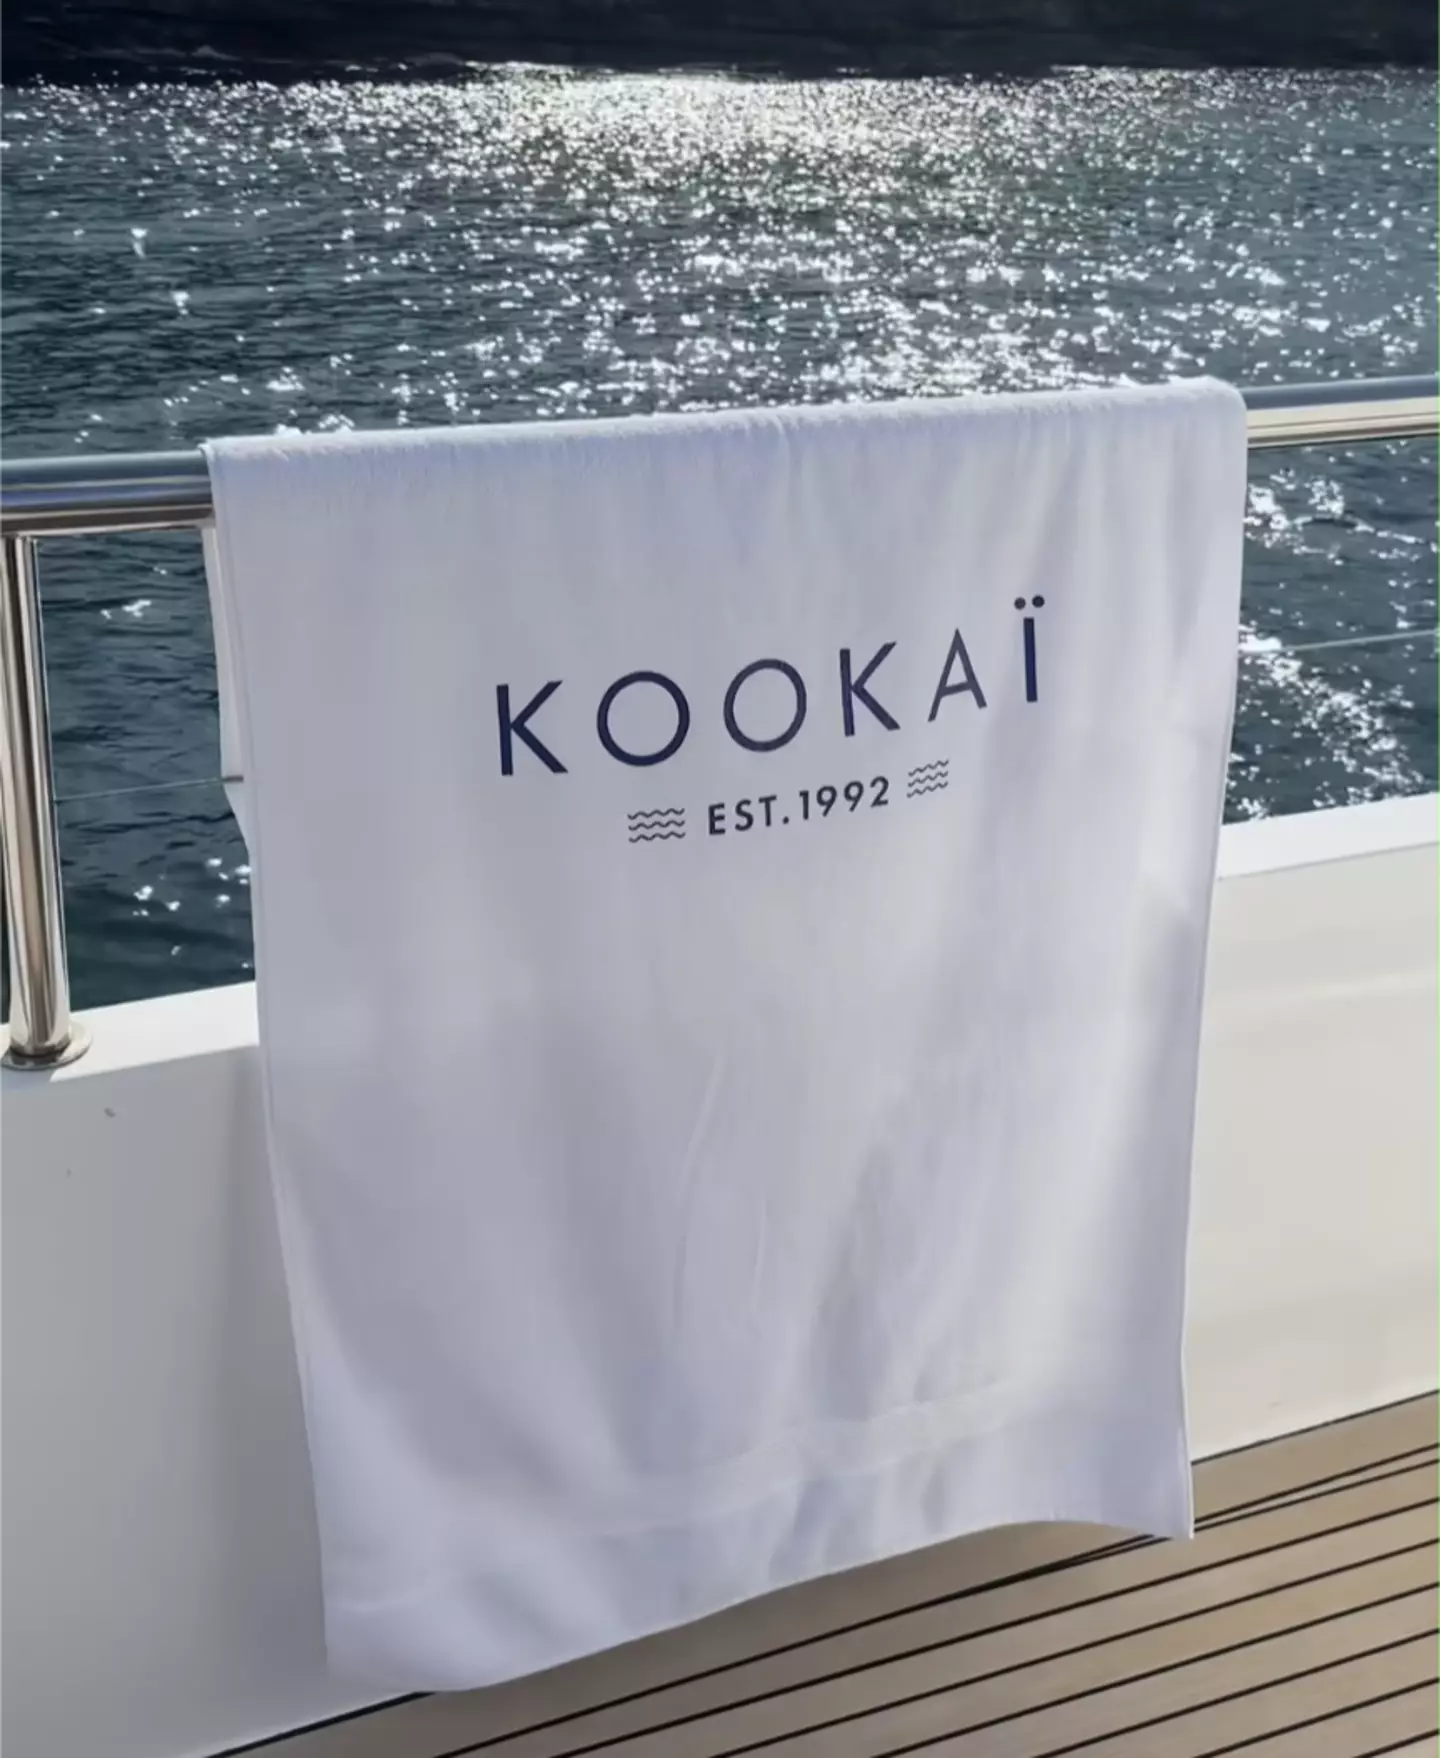 Kookai is a popular fashion boutique in Australia.